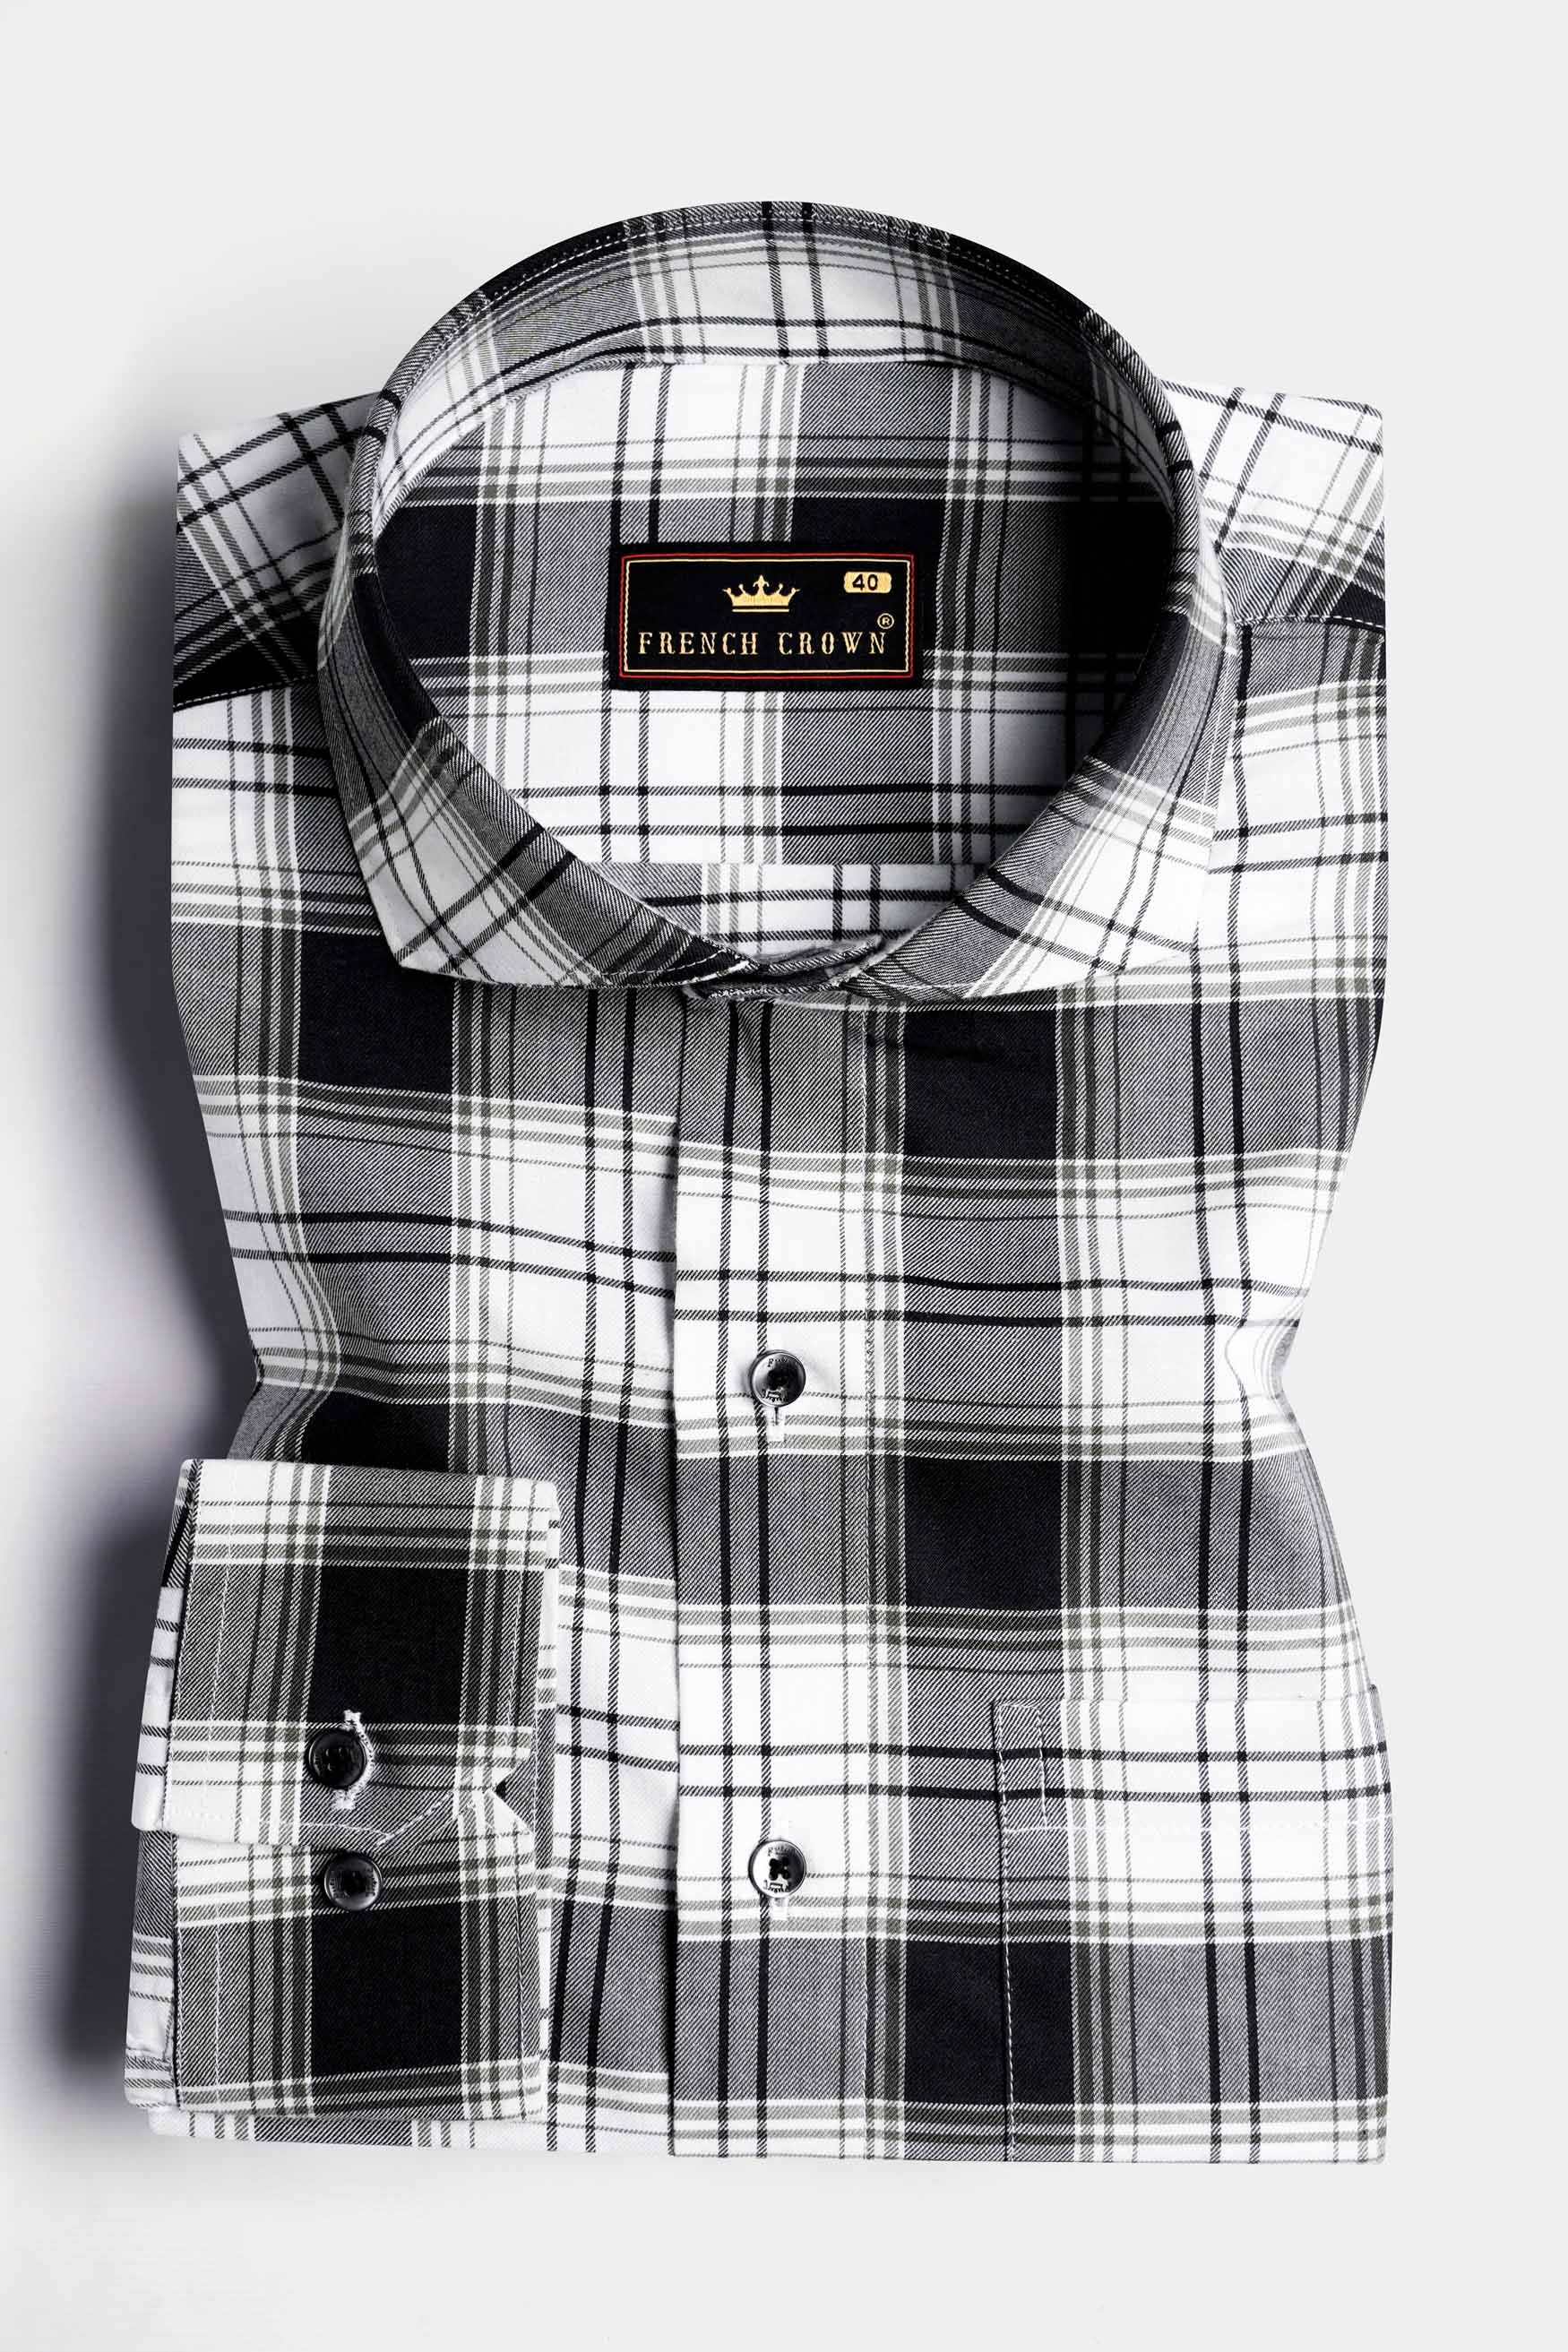 Jade Black and Oslo Gray Twill Plaid Premium Cotton Shirt